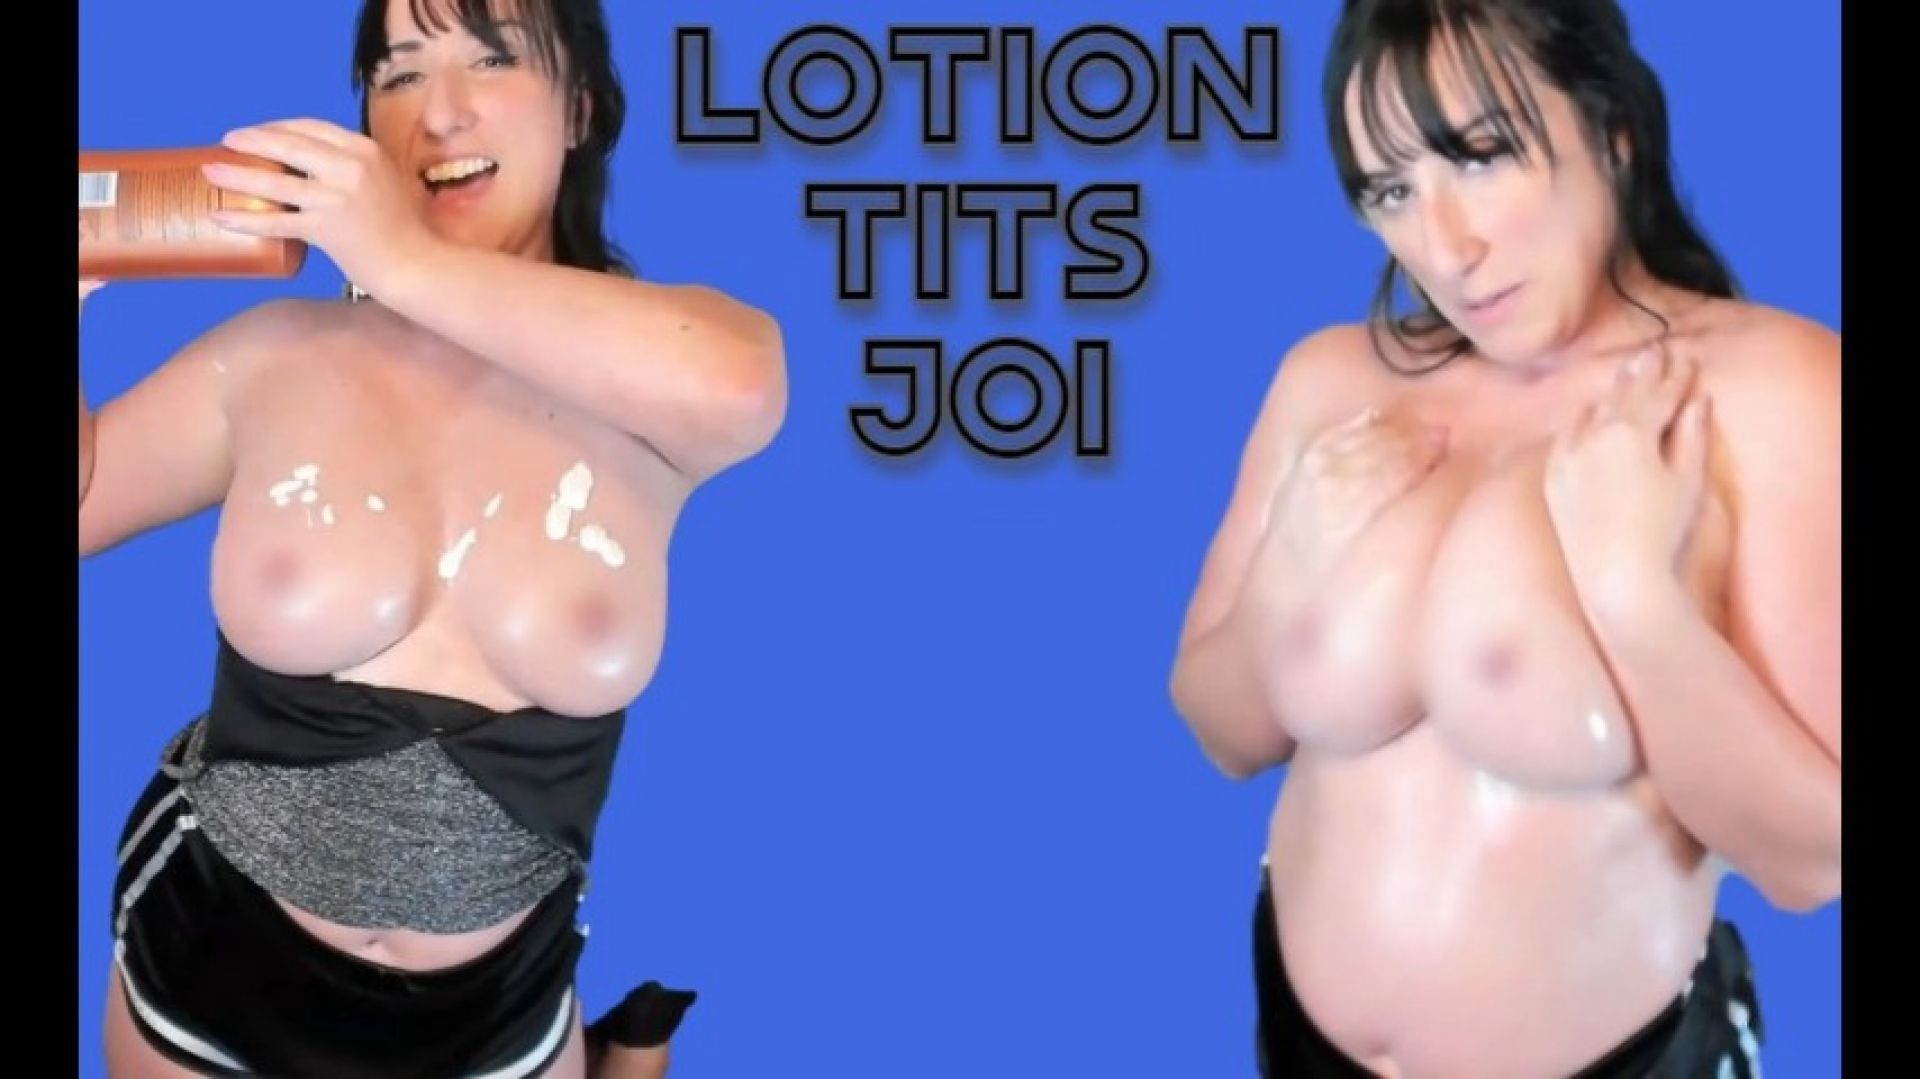 It's a Lotion Tits JOI